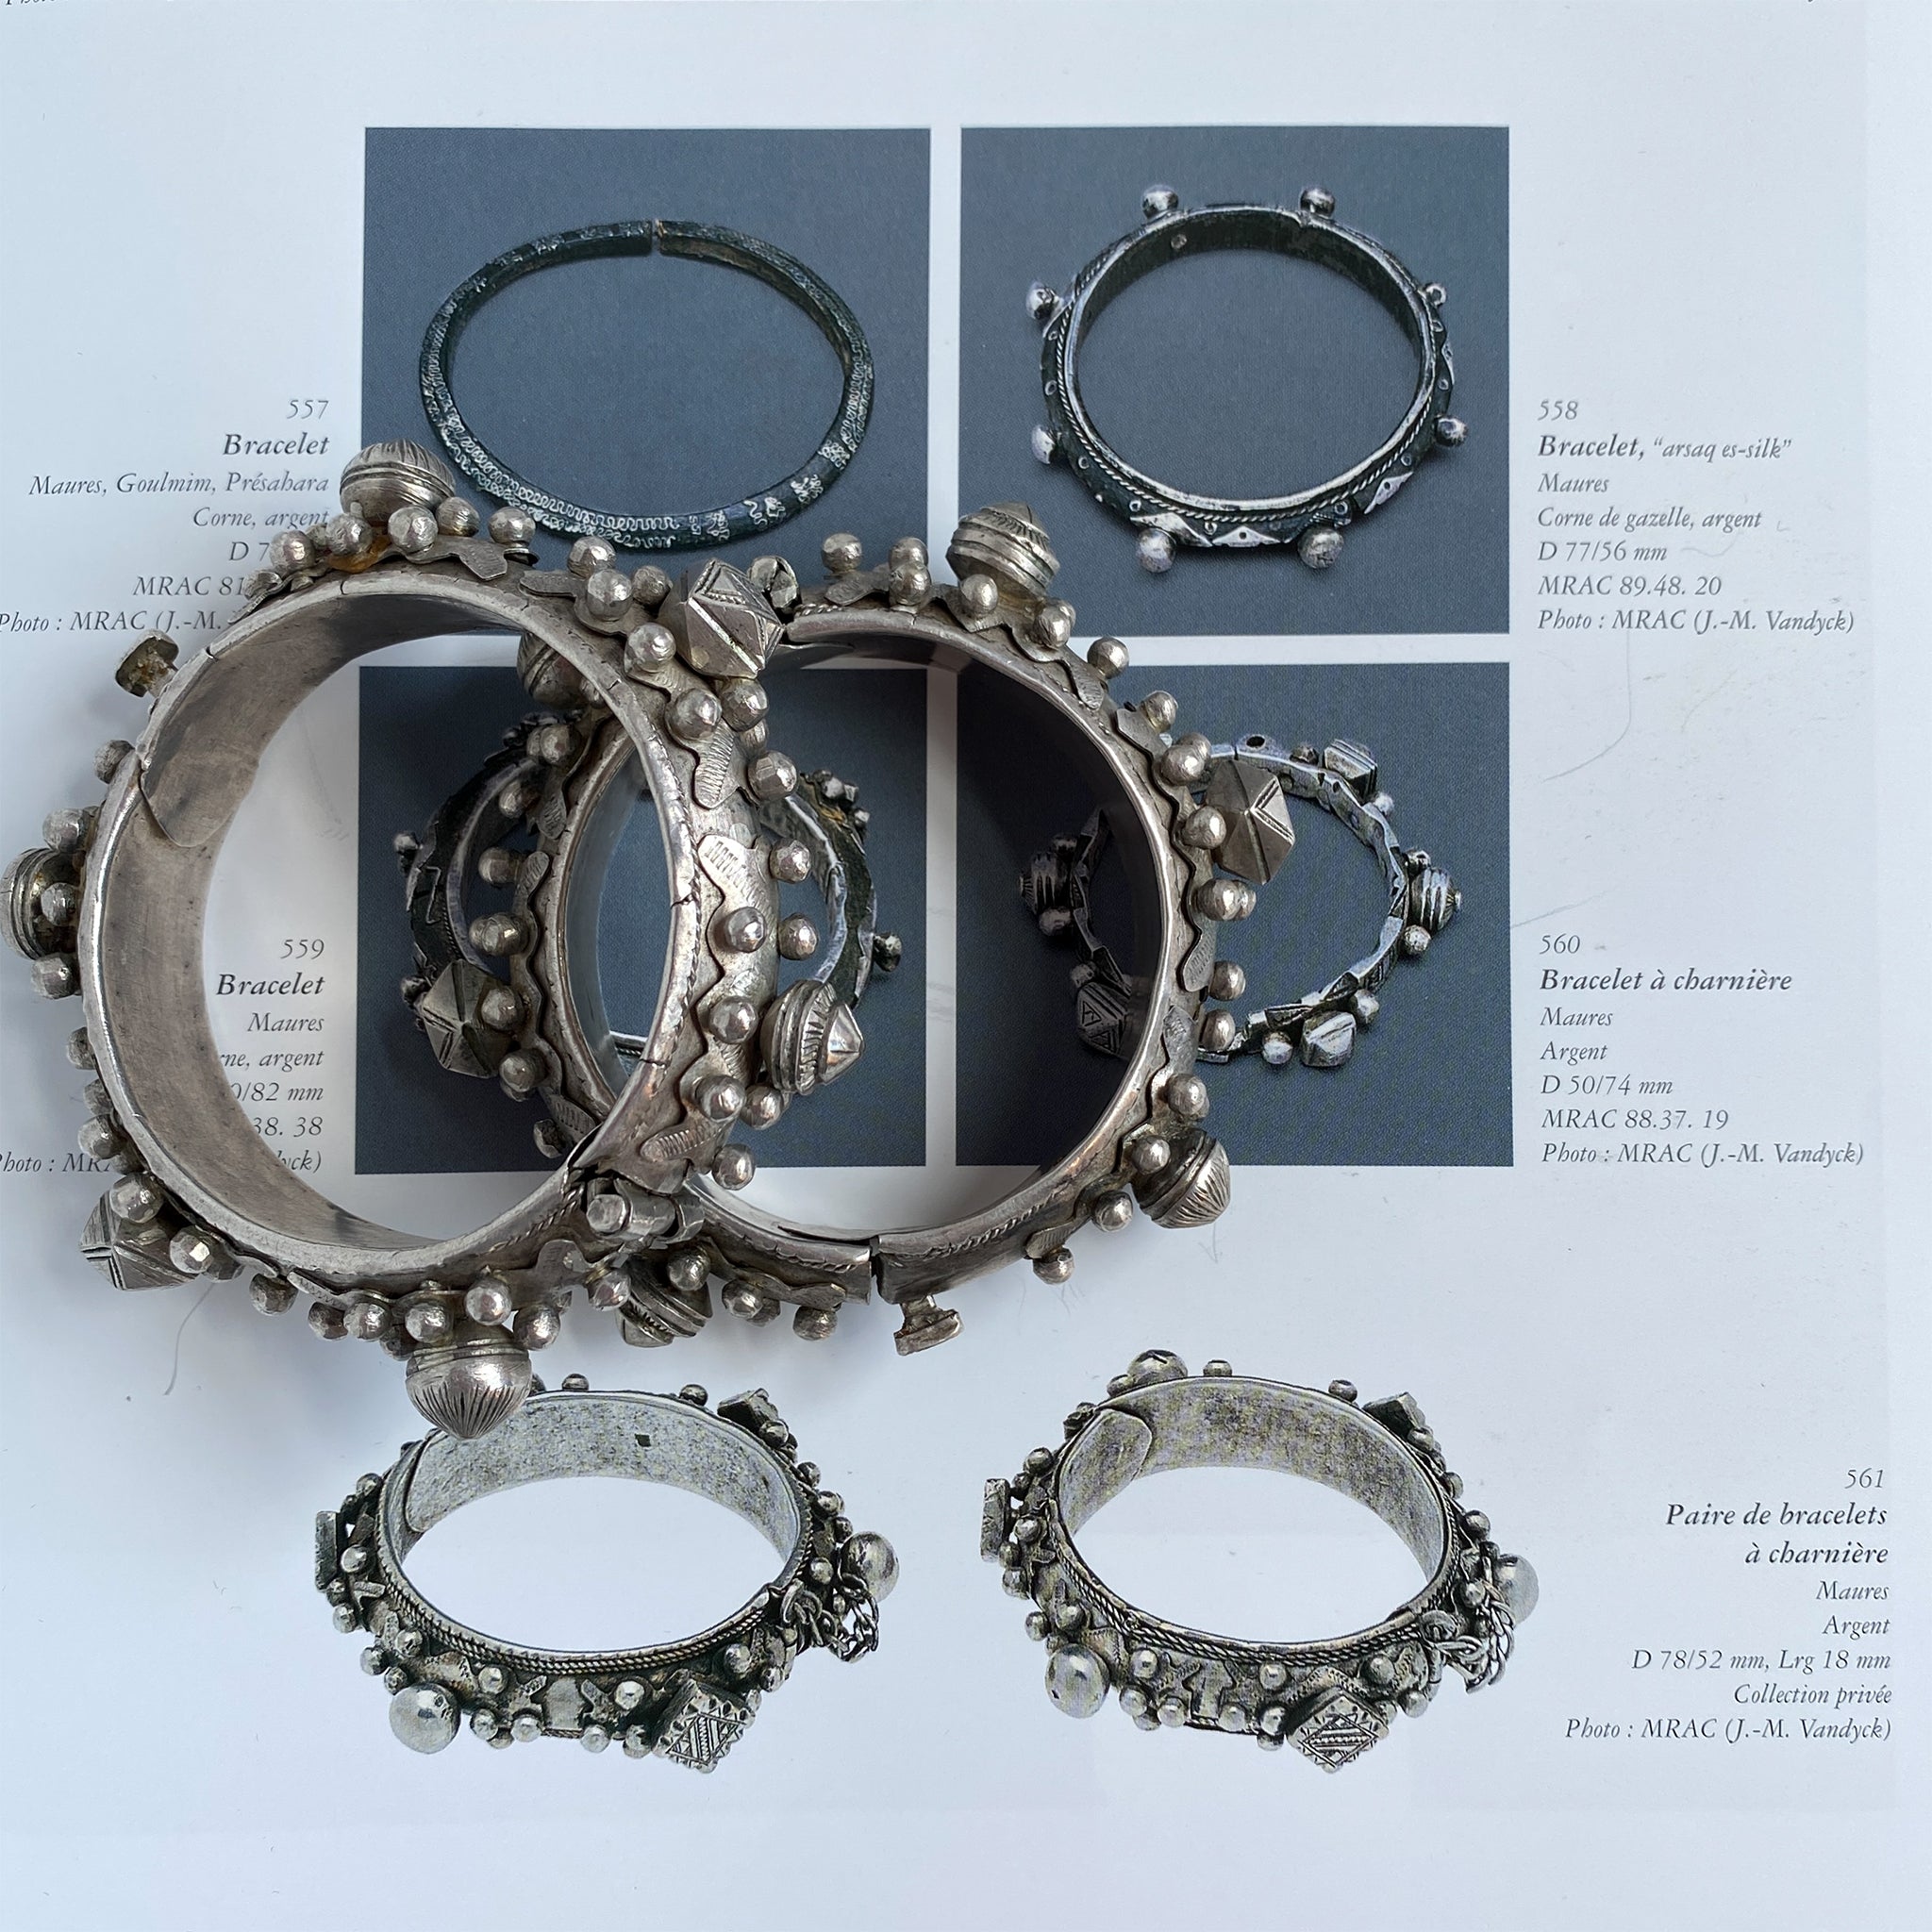 Matching Pair of Quality Vintage Silver Saharan 'Mizam' Bracelets from Morocco